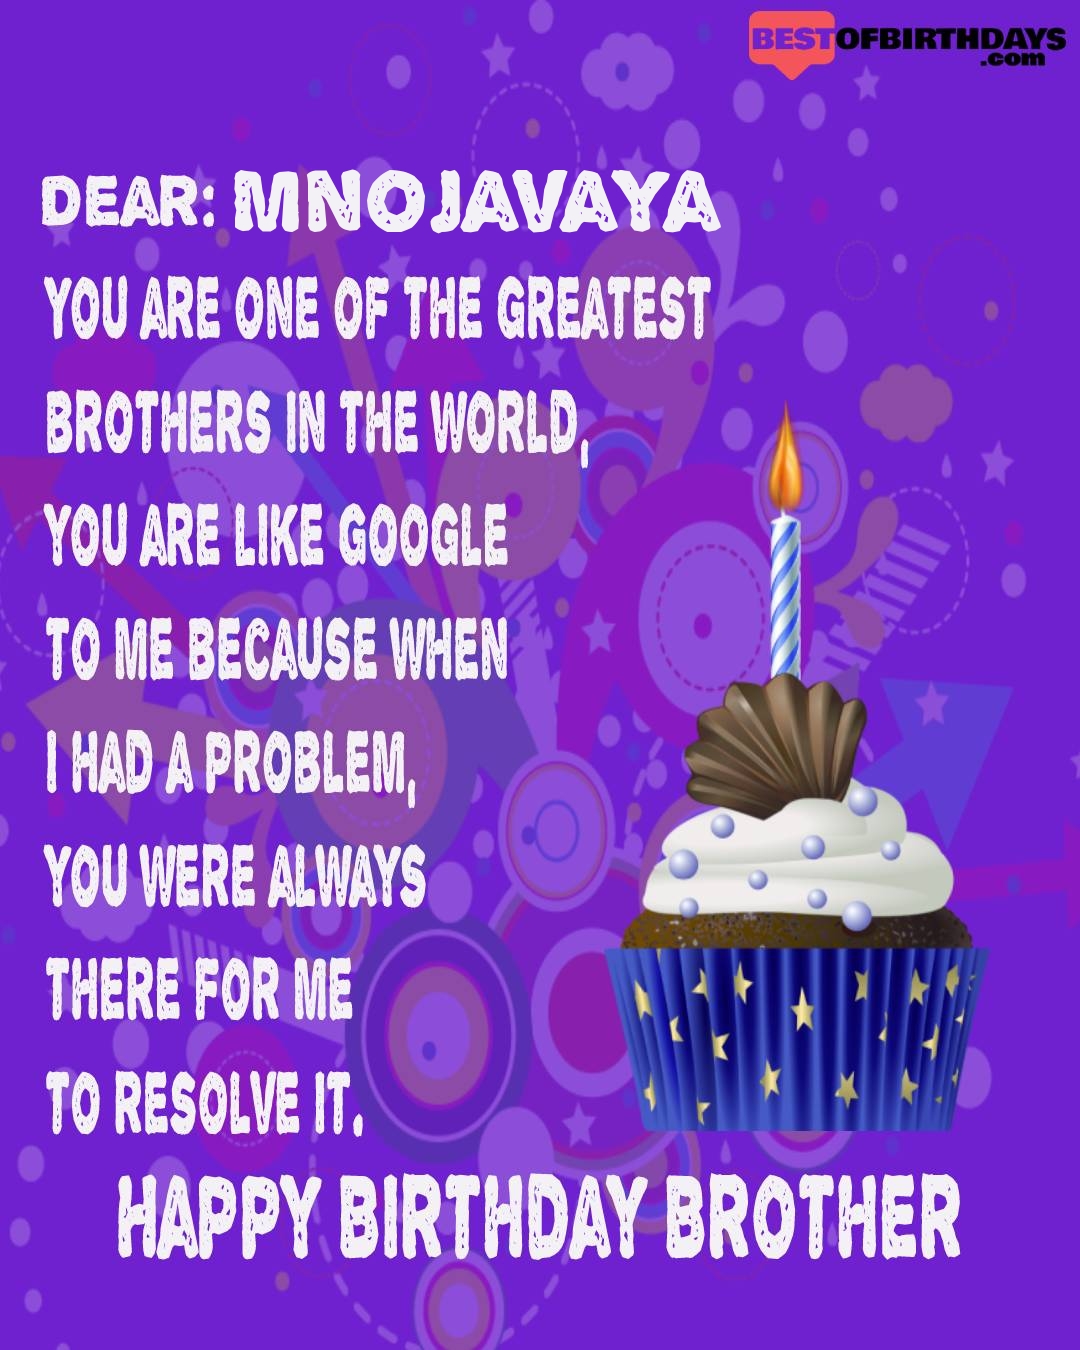 Happy birthday mnojavaya bhai brother bro